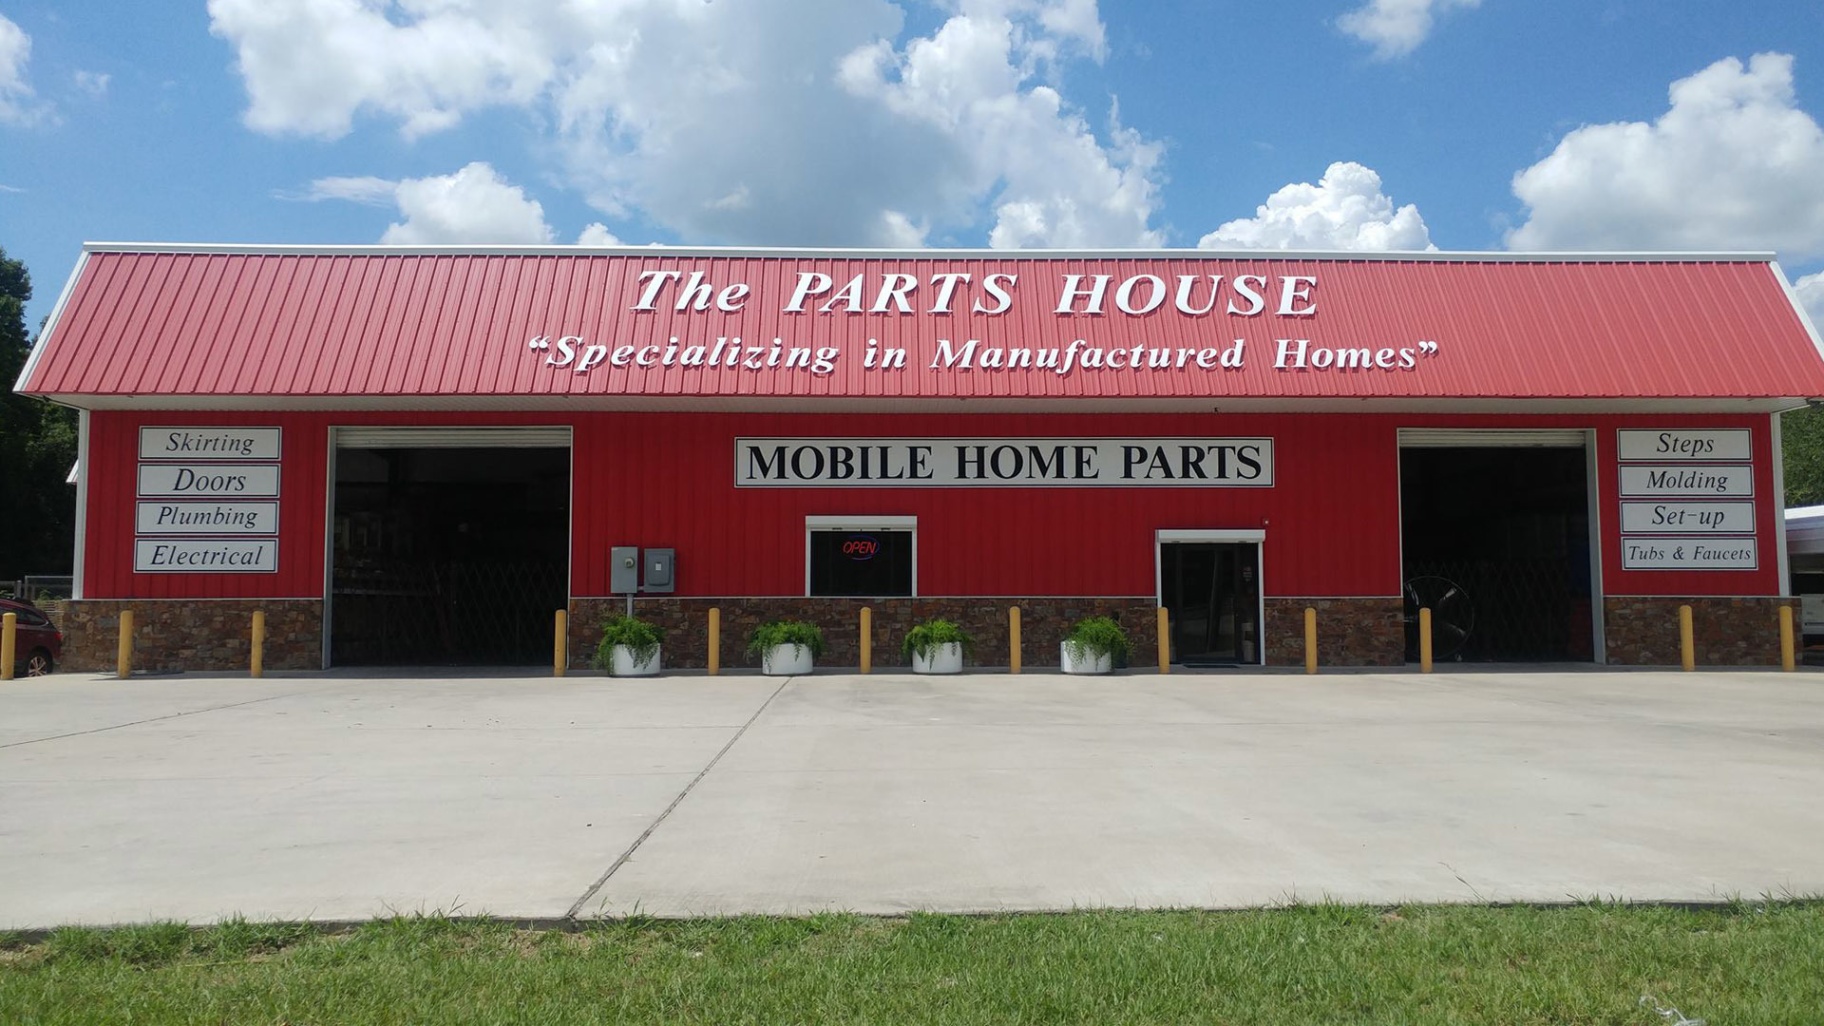 mobile home accessories store near me Niche Utama Home Mobile Home Parts in Vidor, TX  Parts House () -